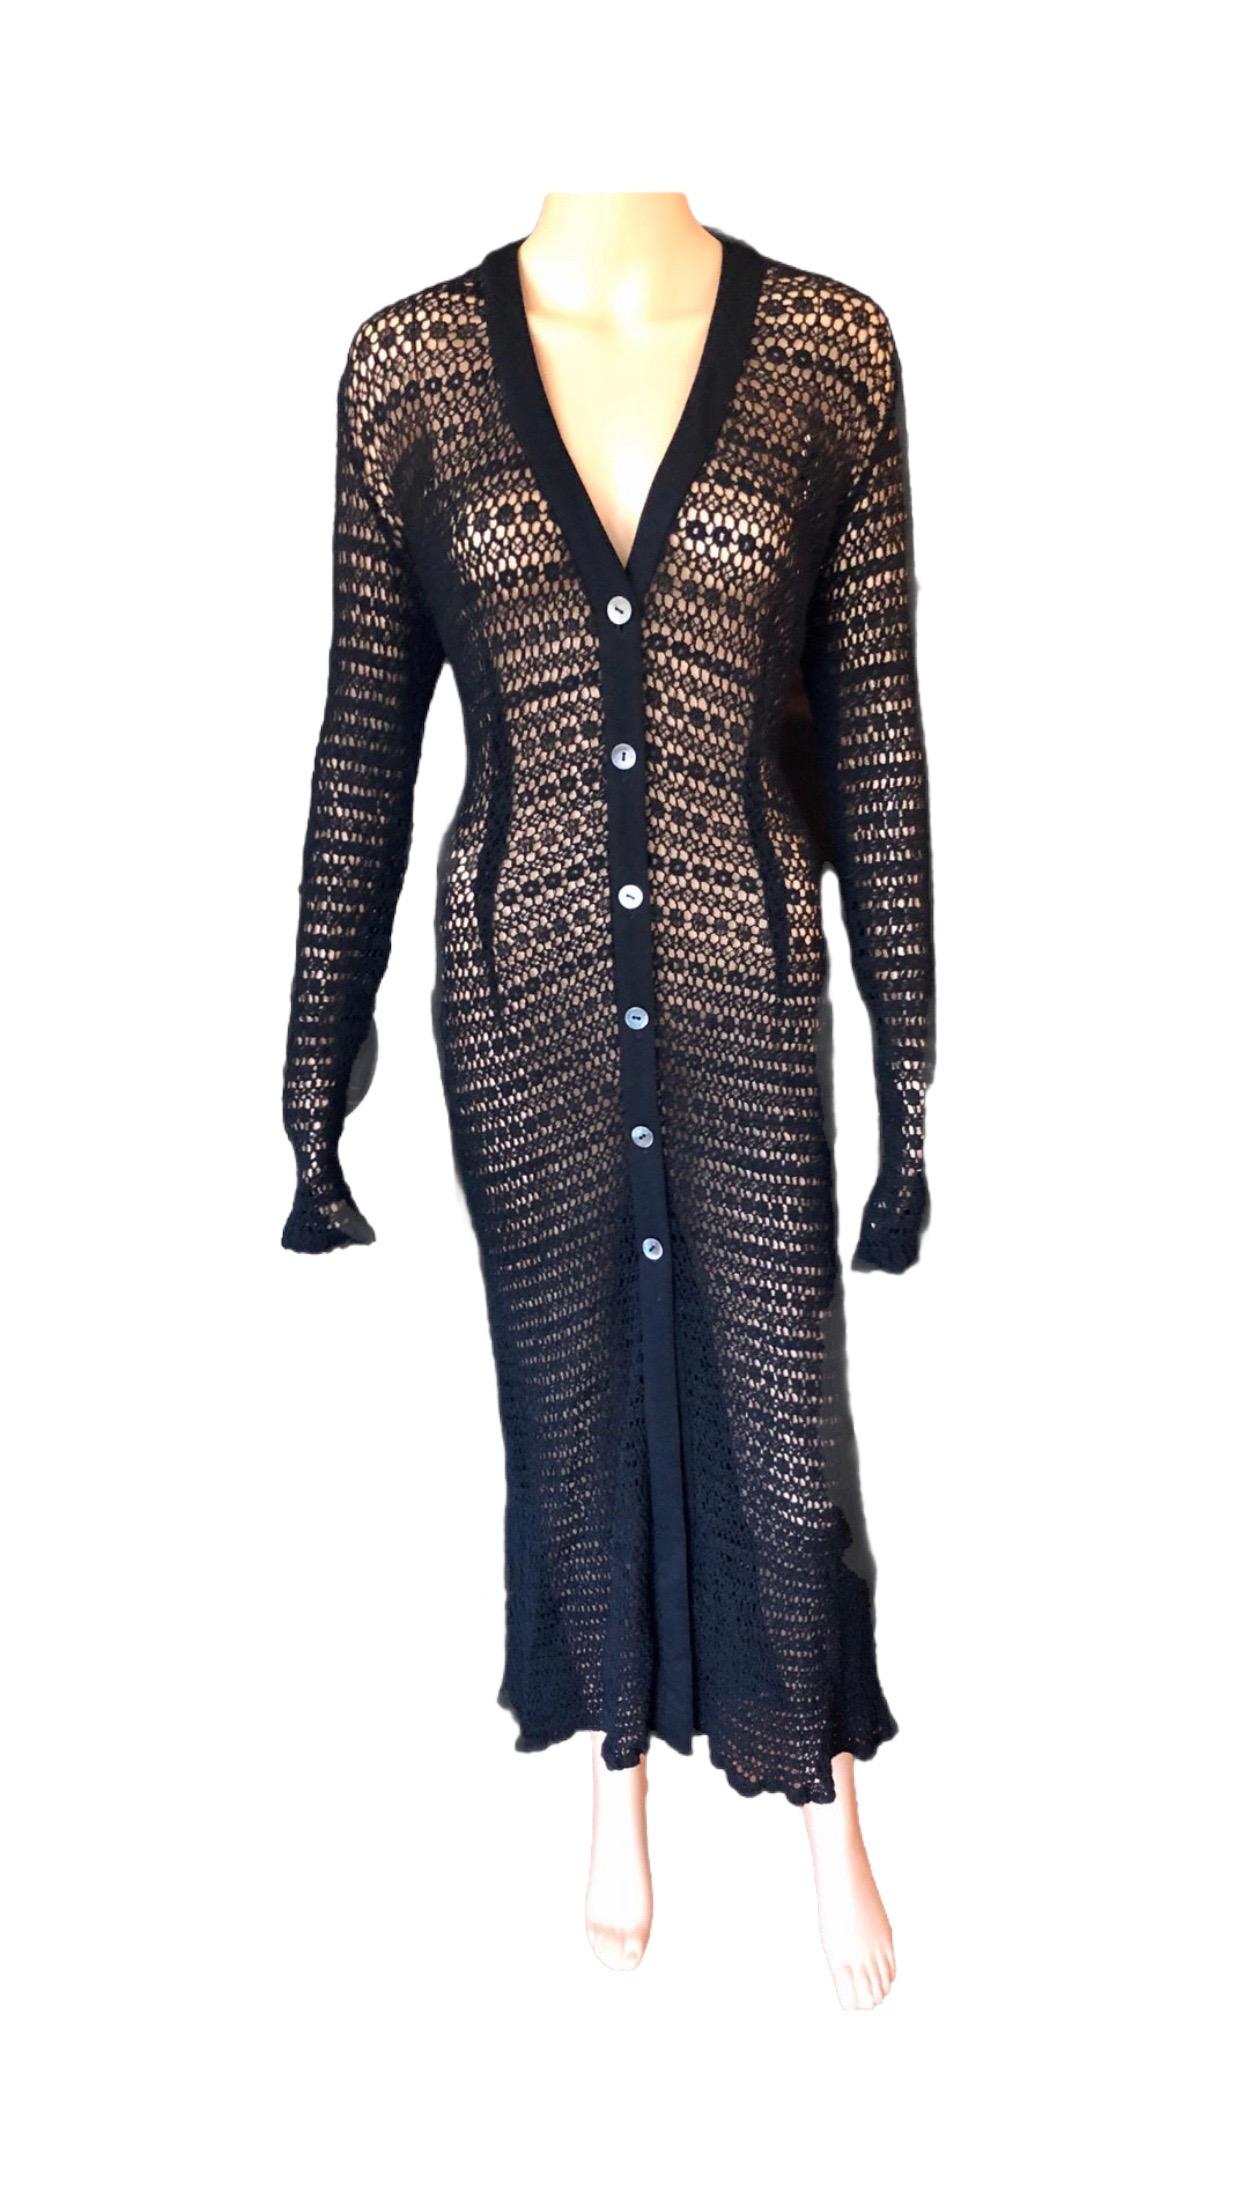 Women's or Men's Dolce & Gabbana Vintage 1990's Sheer Open Knit Crochet Fishnet Black Maxi Dress For Sale